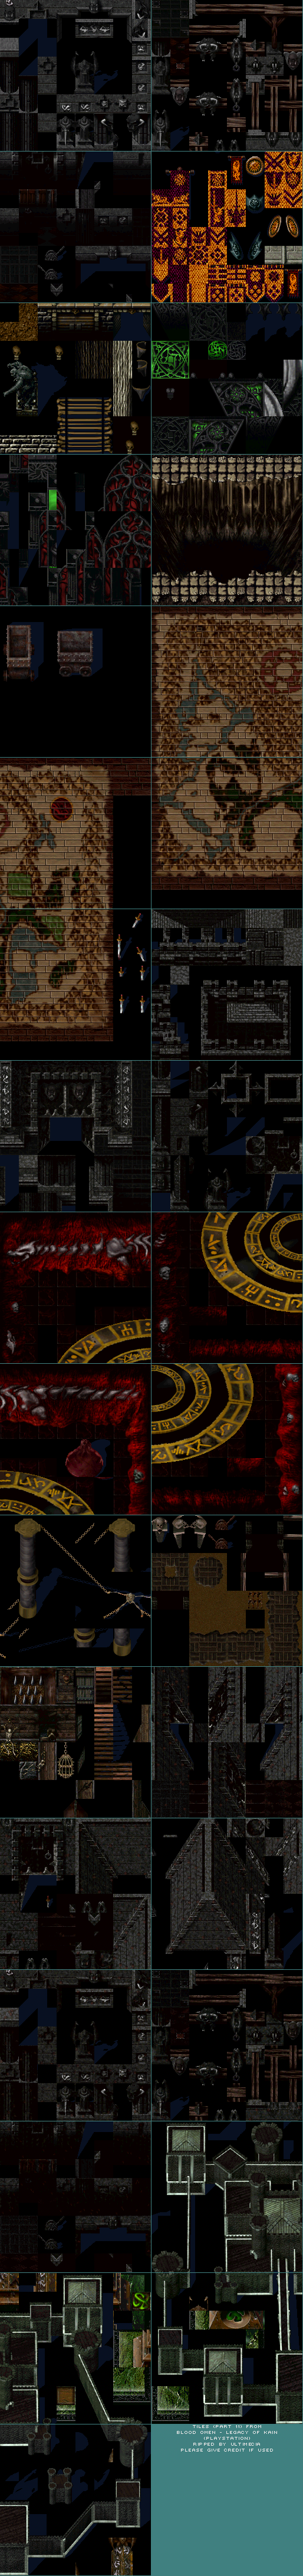 Legacy of Kain: Blood Omen - Tiles 11